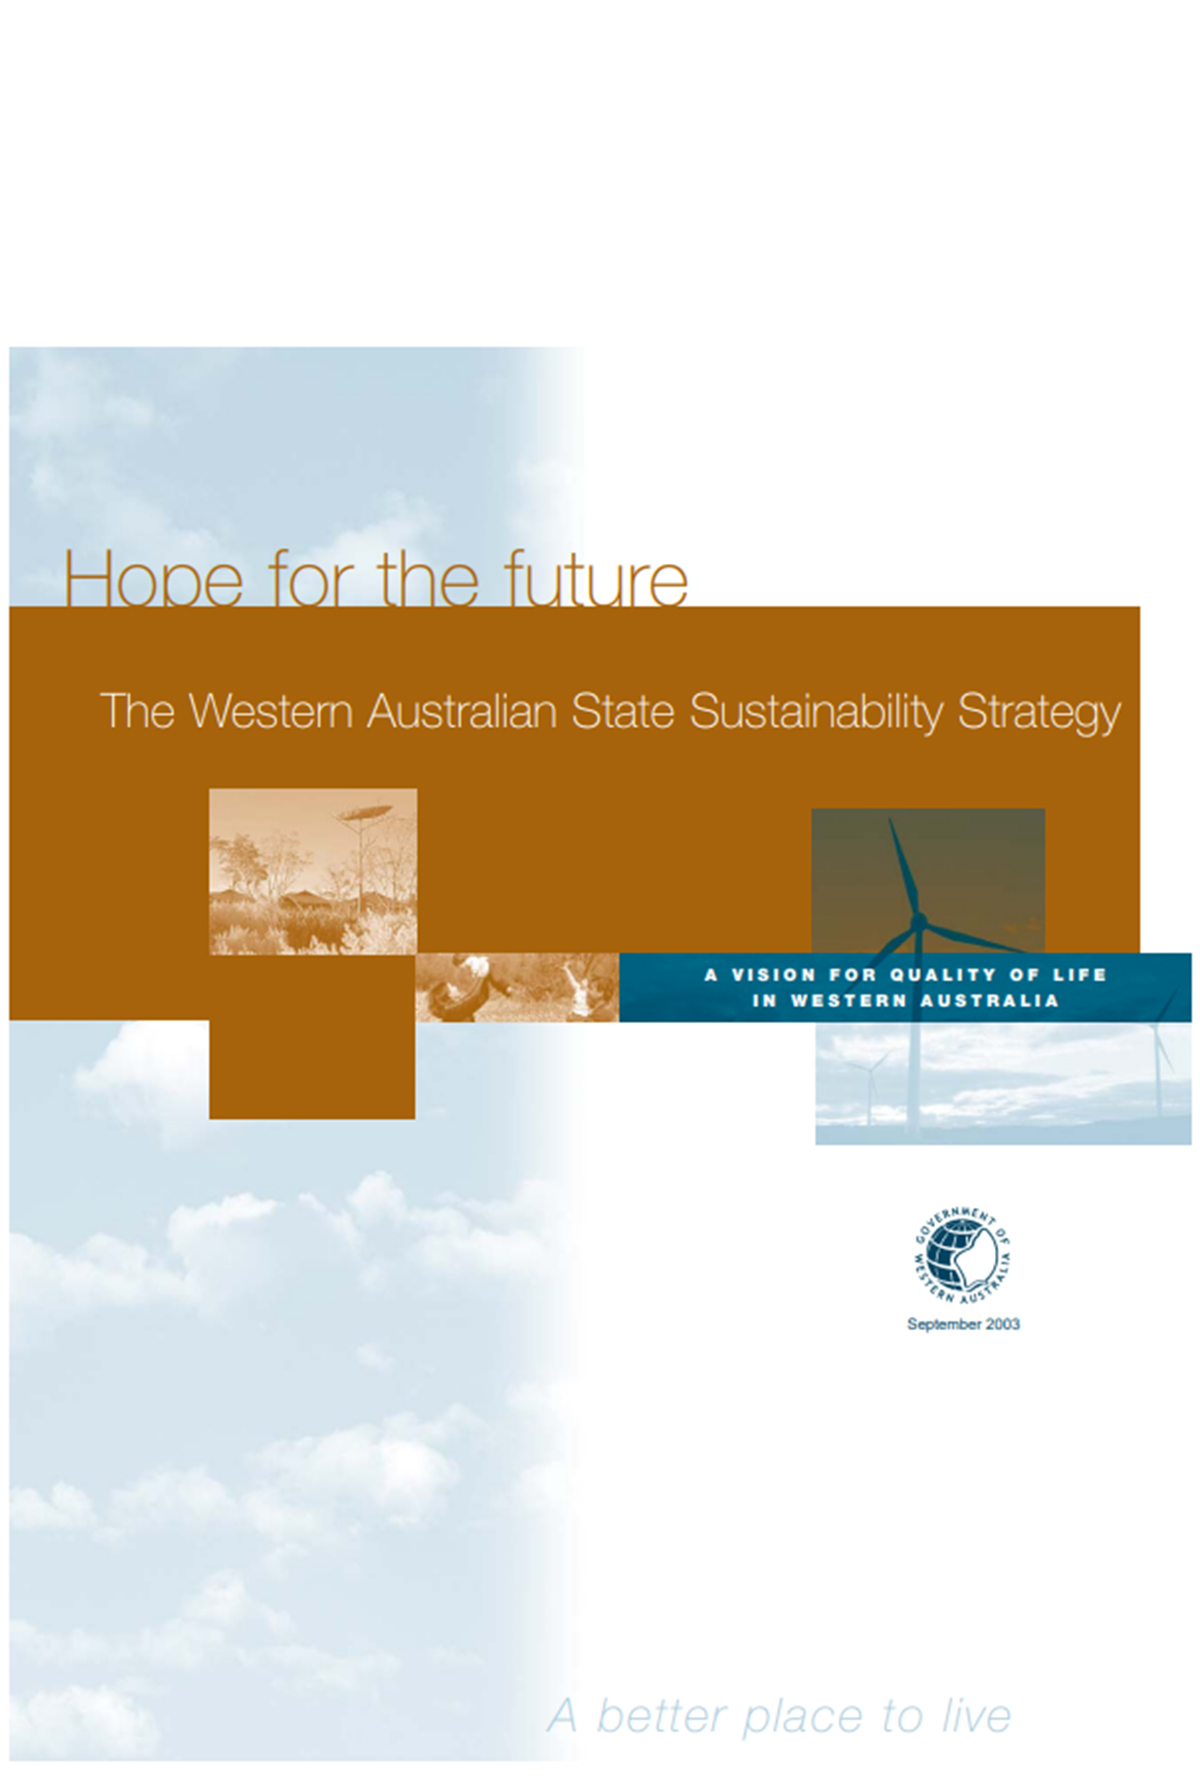 WA's State Sustainability Strategy